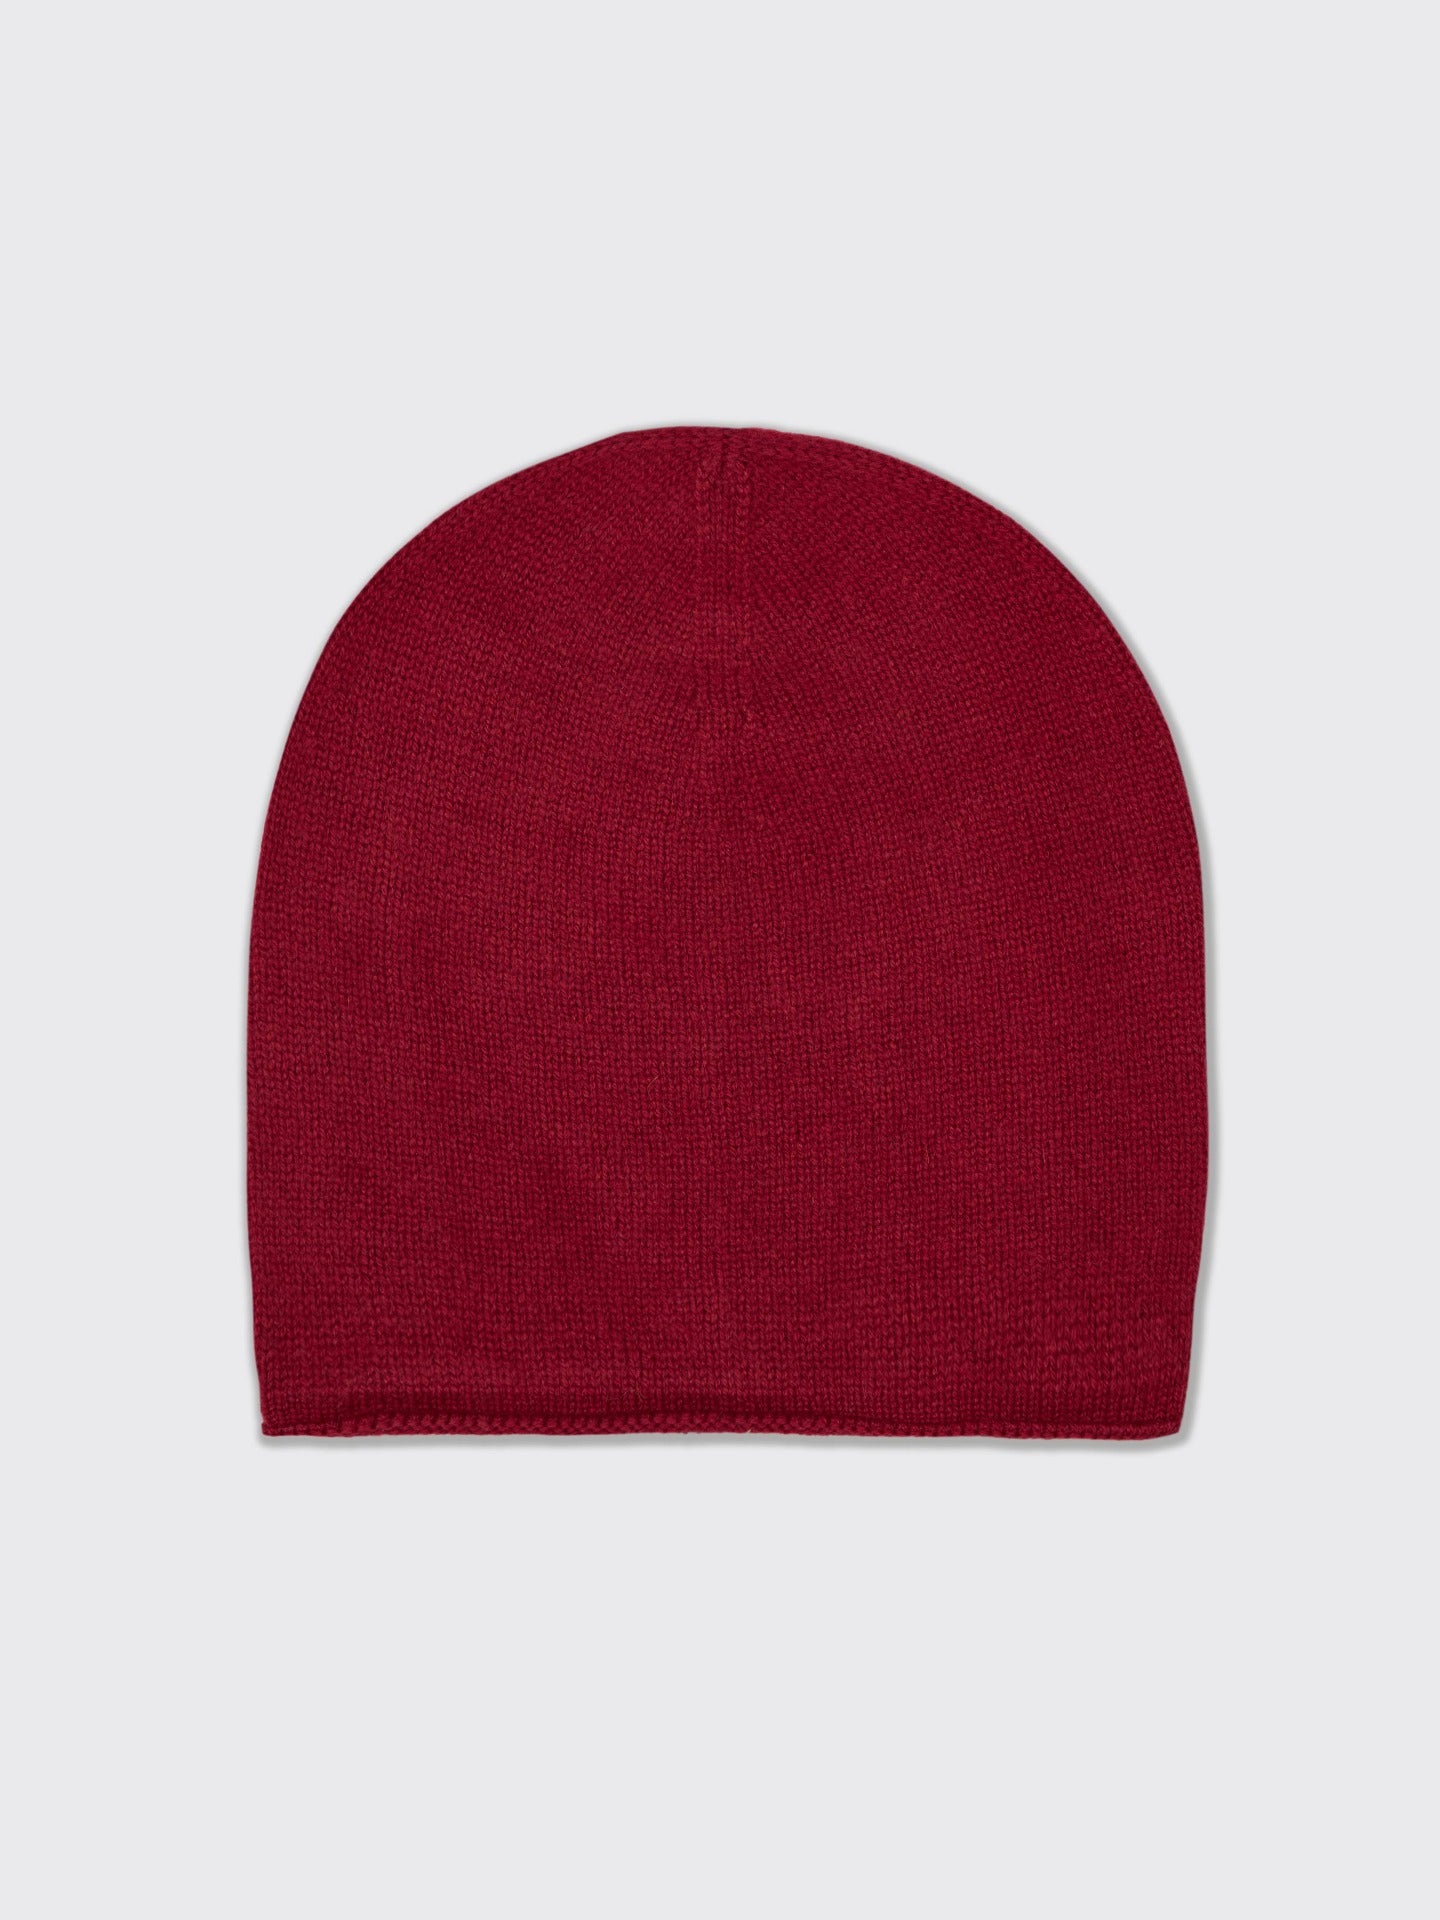 Women's Cashmere $99 Hat & Sweater Cabernet - Gobi Cashmere